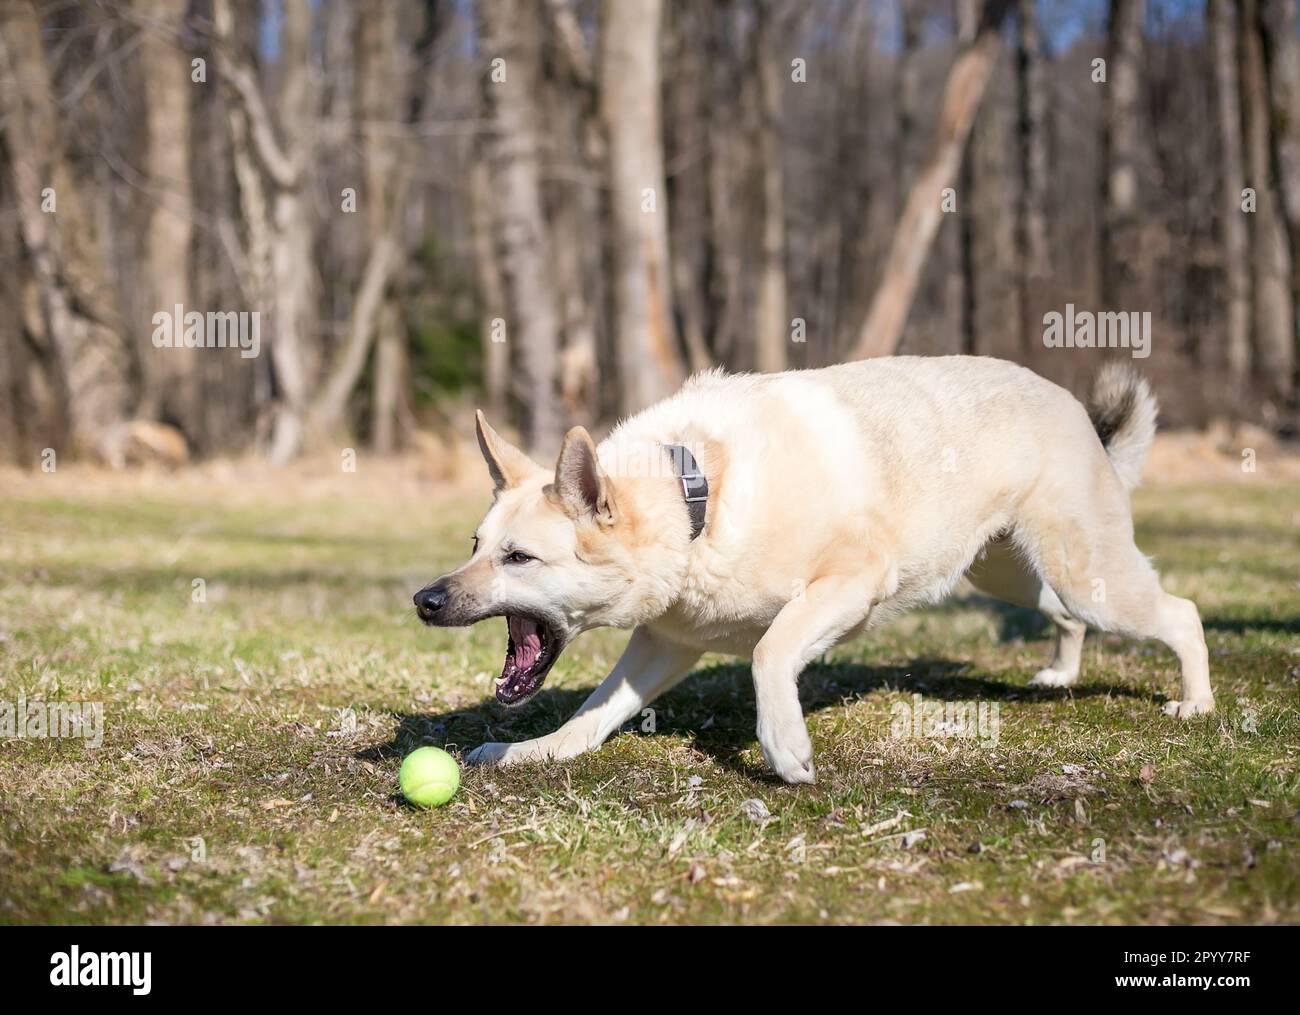 A German Shepherd x Husky mixed breed dog reaching to pick up a ball Stock Photo